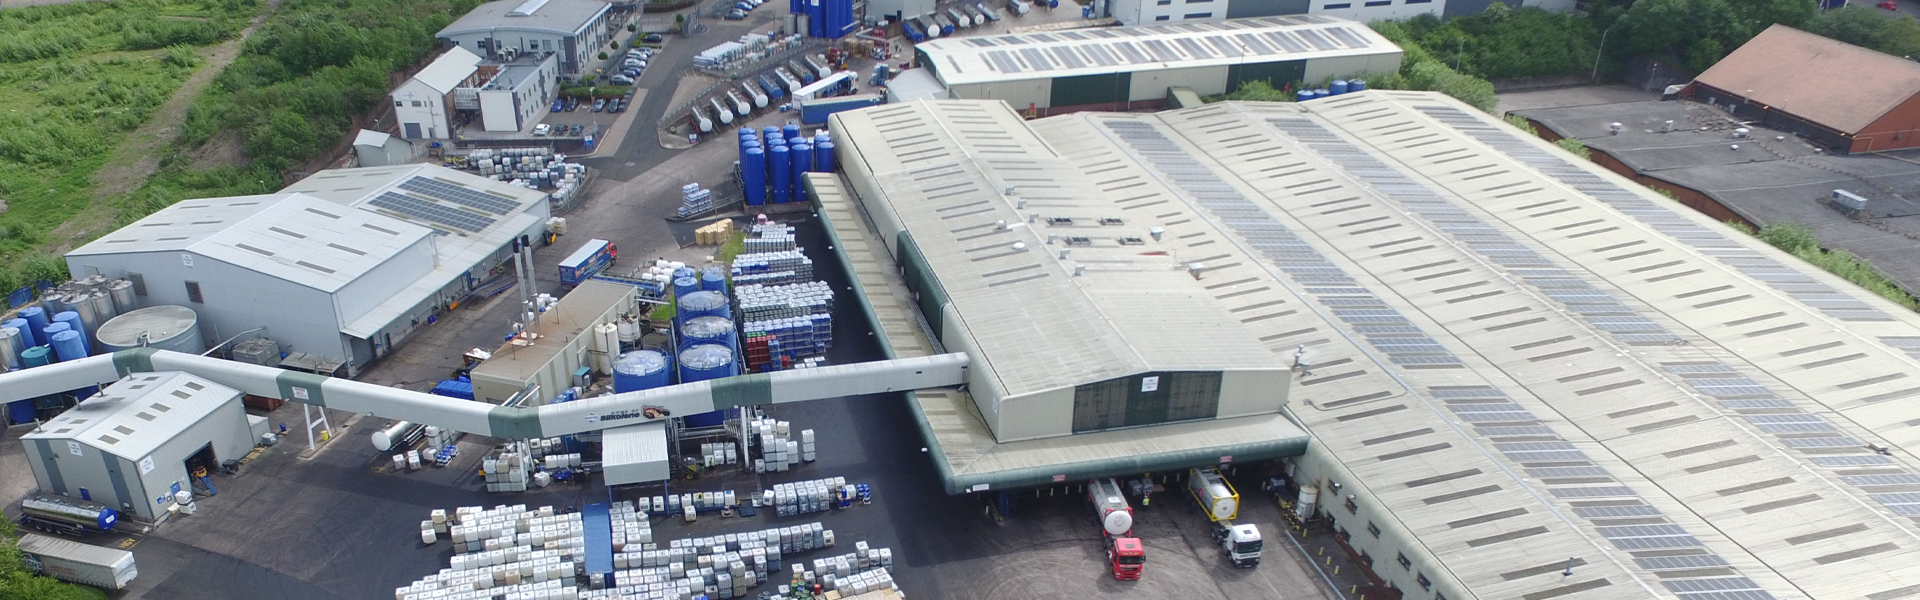 FUCHS UK lubricant manufacturing plant